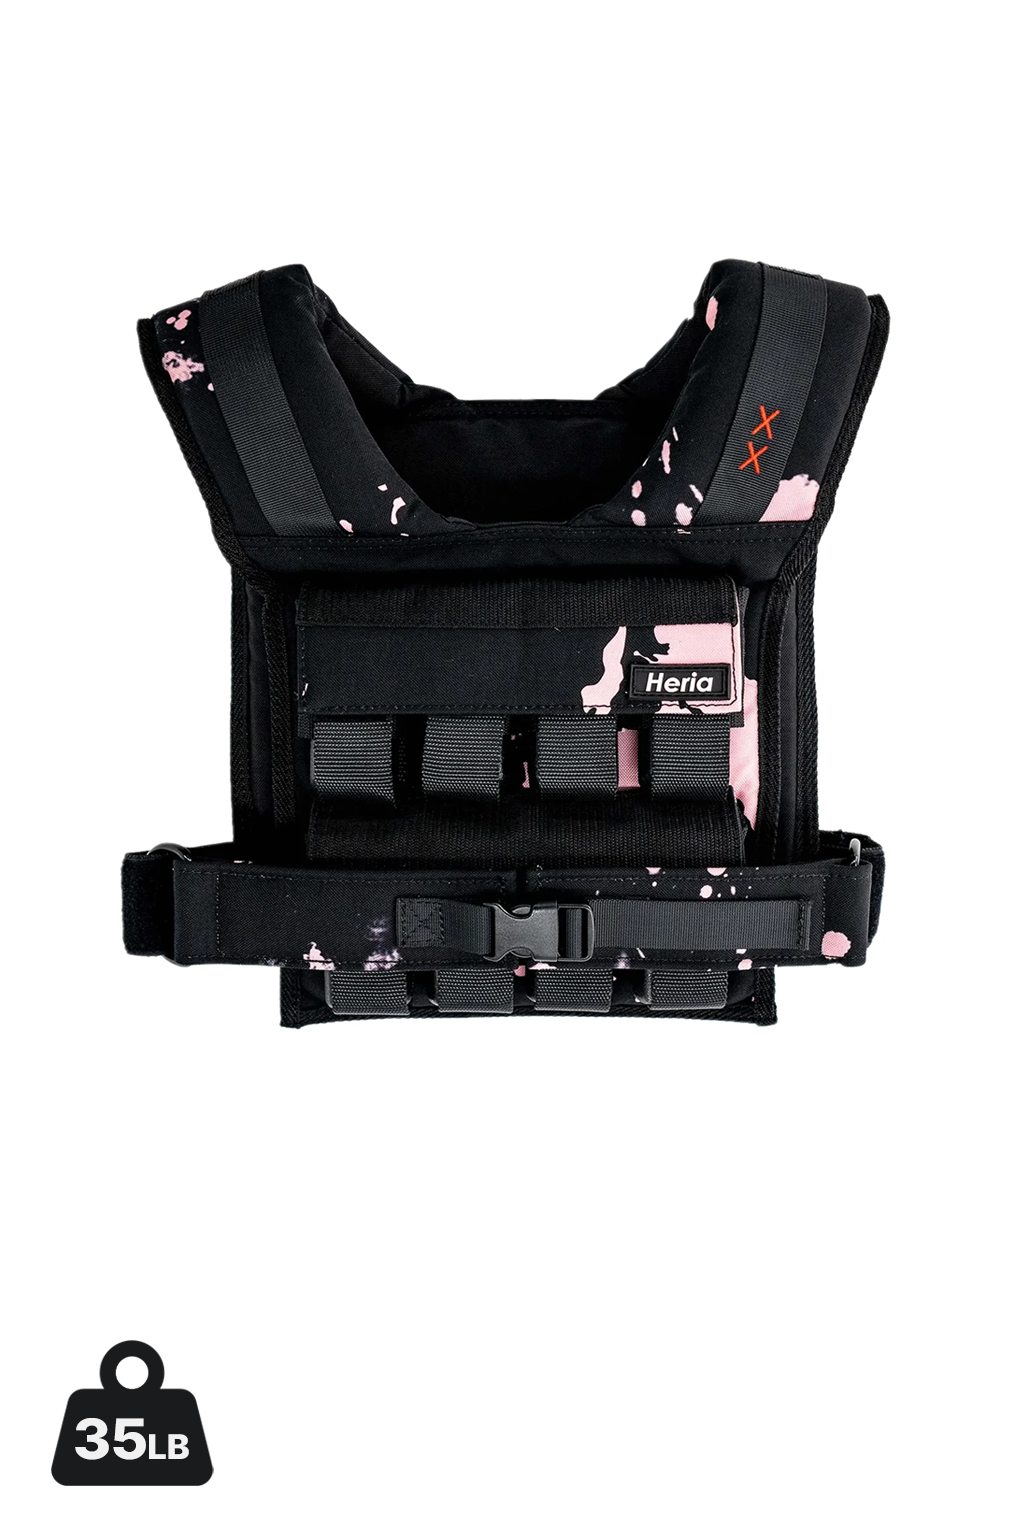 35LB Weight Vest - Black/Pink